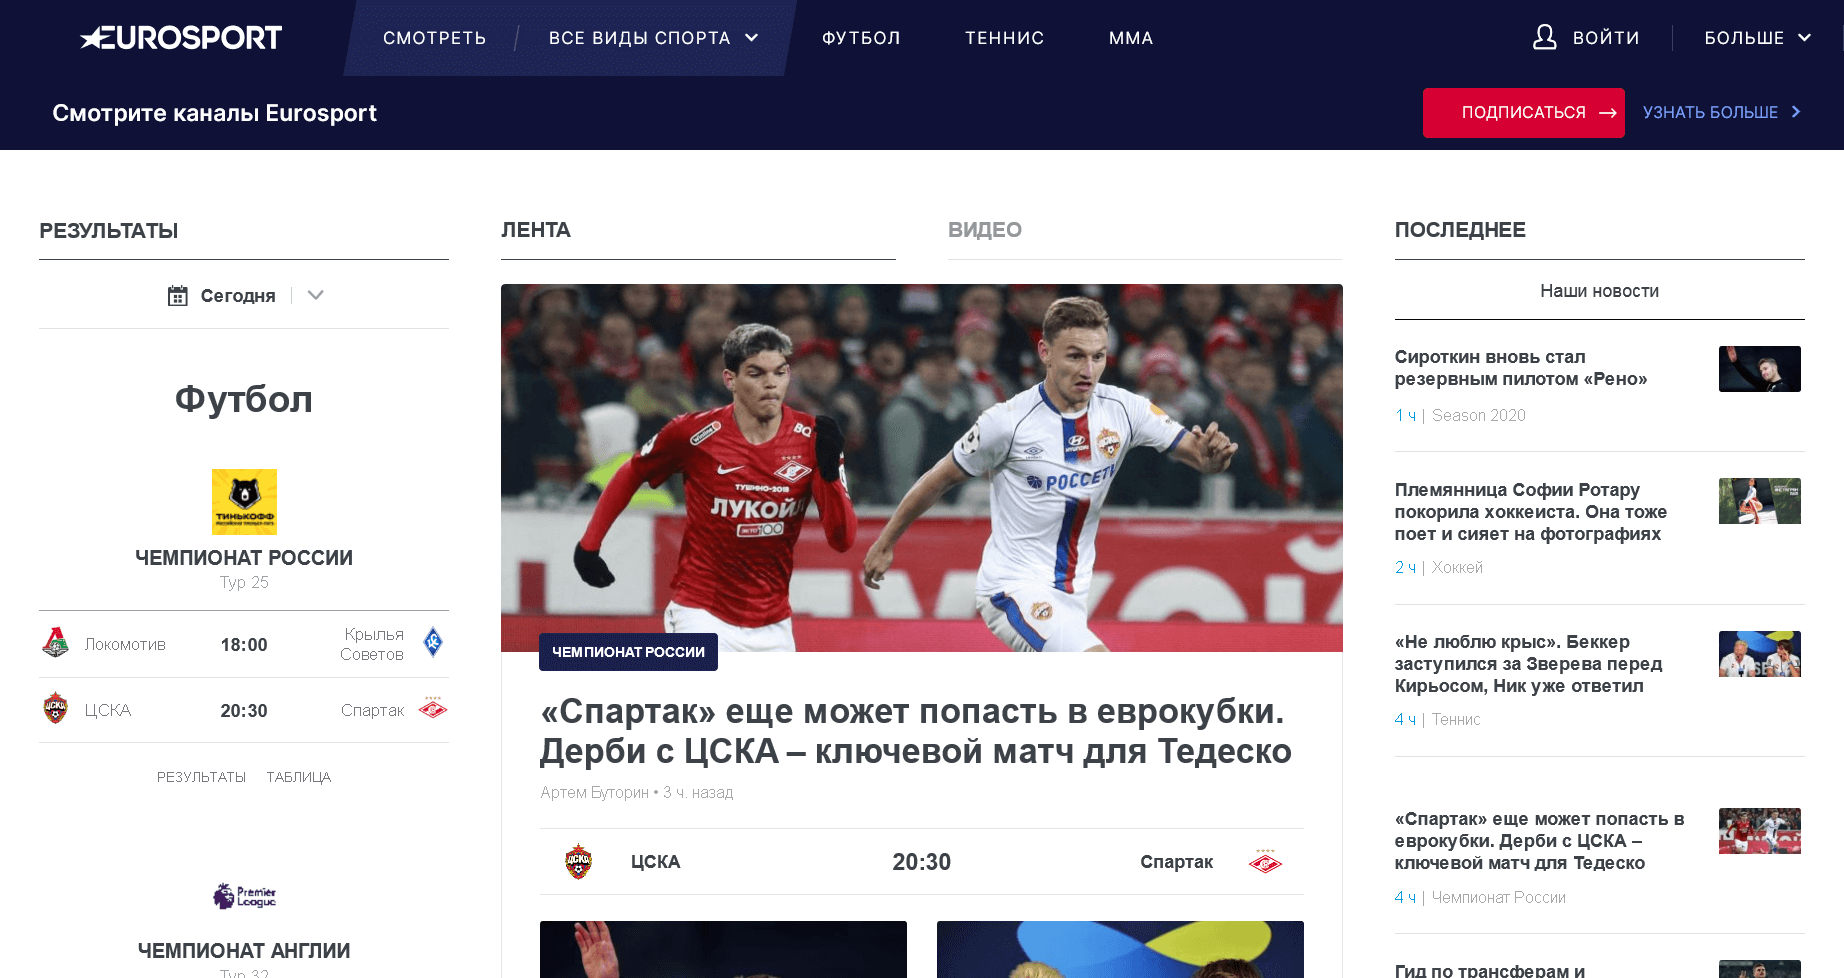 Eurosport - главная сайта